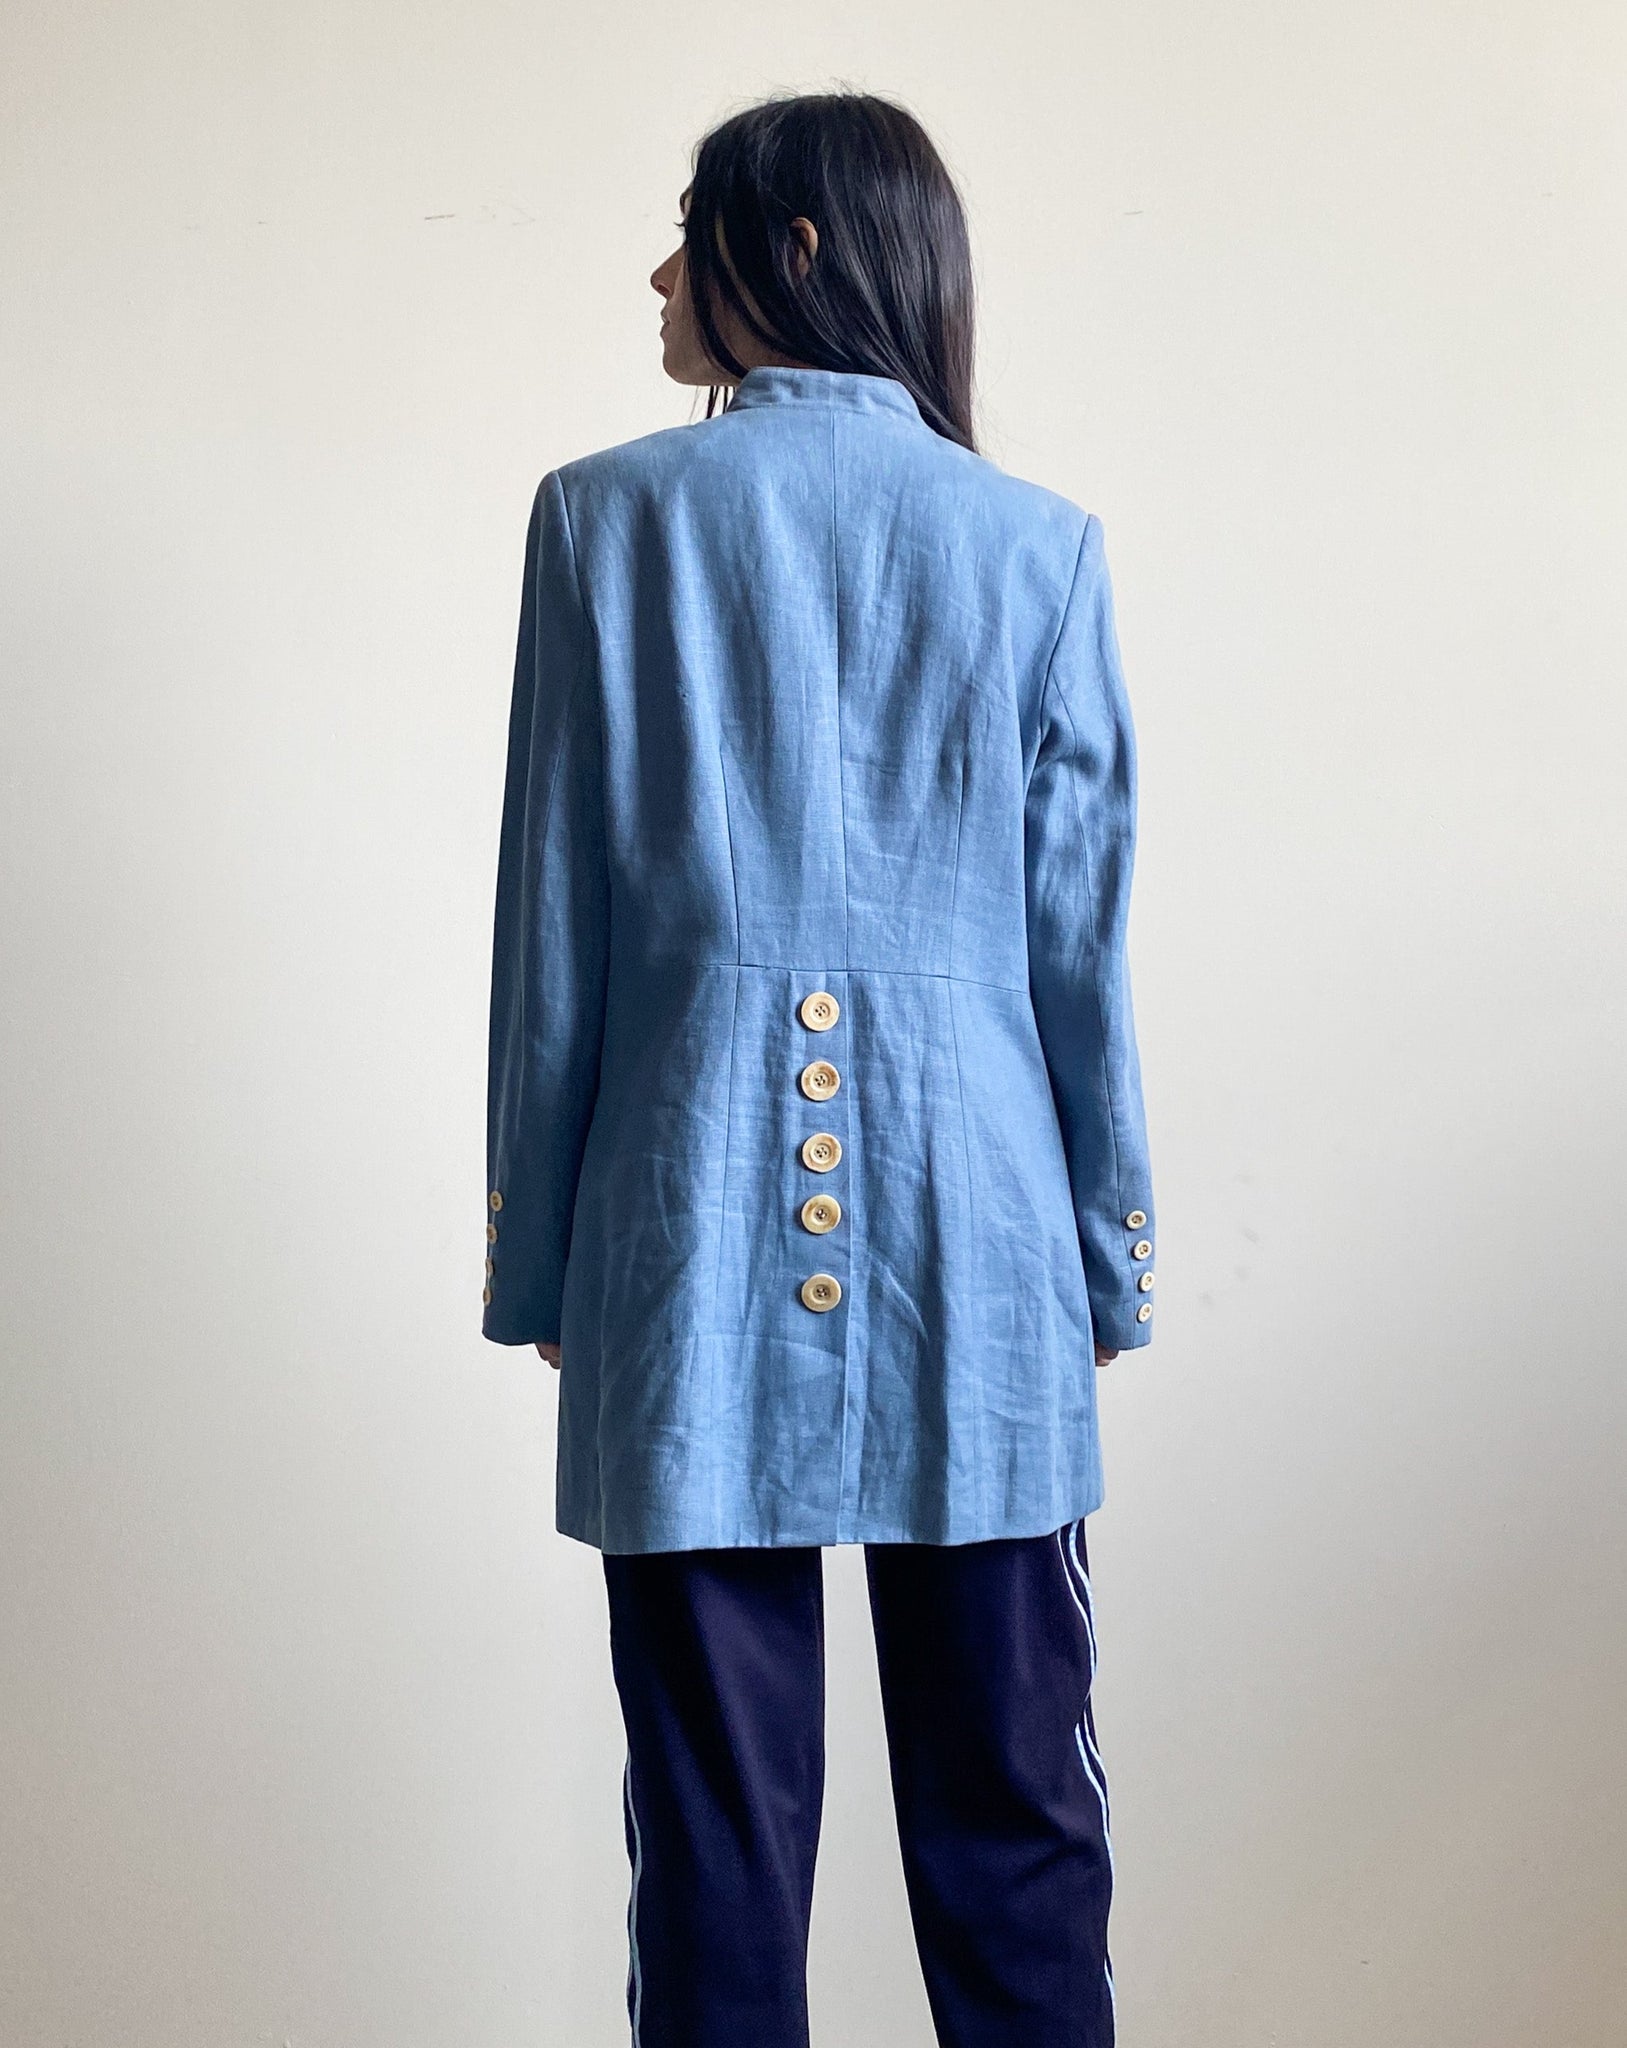 Maria Pucci Couture Blue Jacket (L)